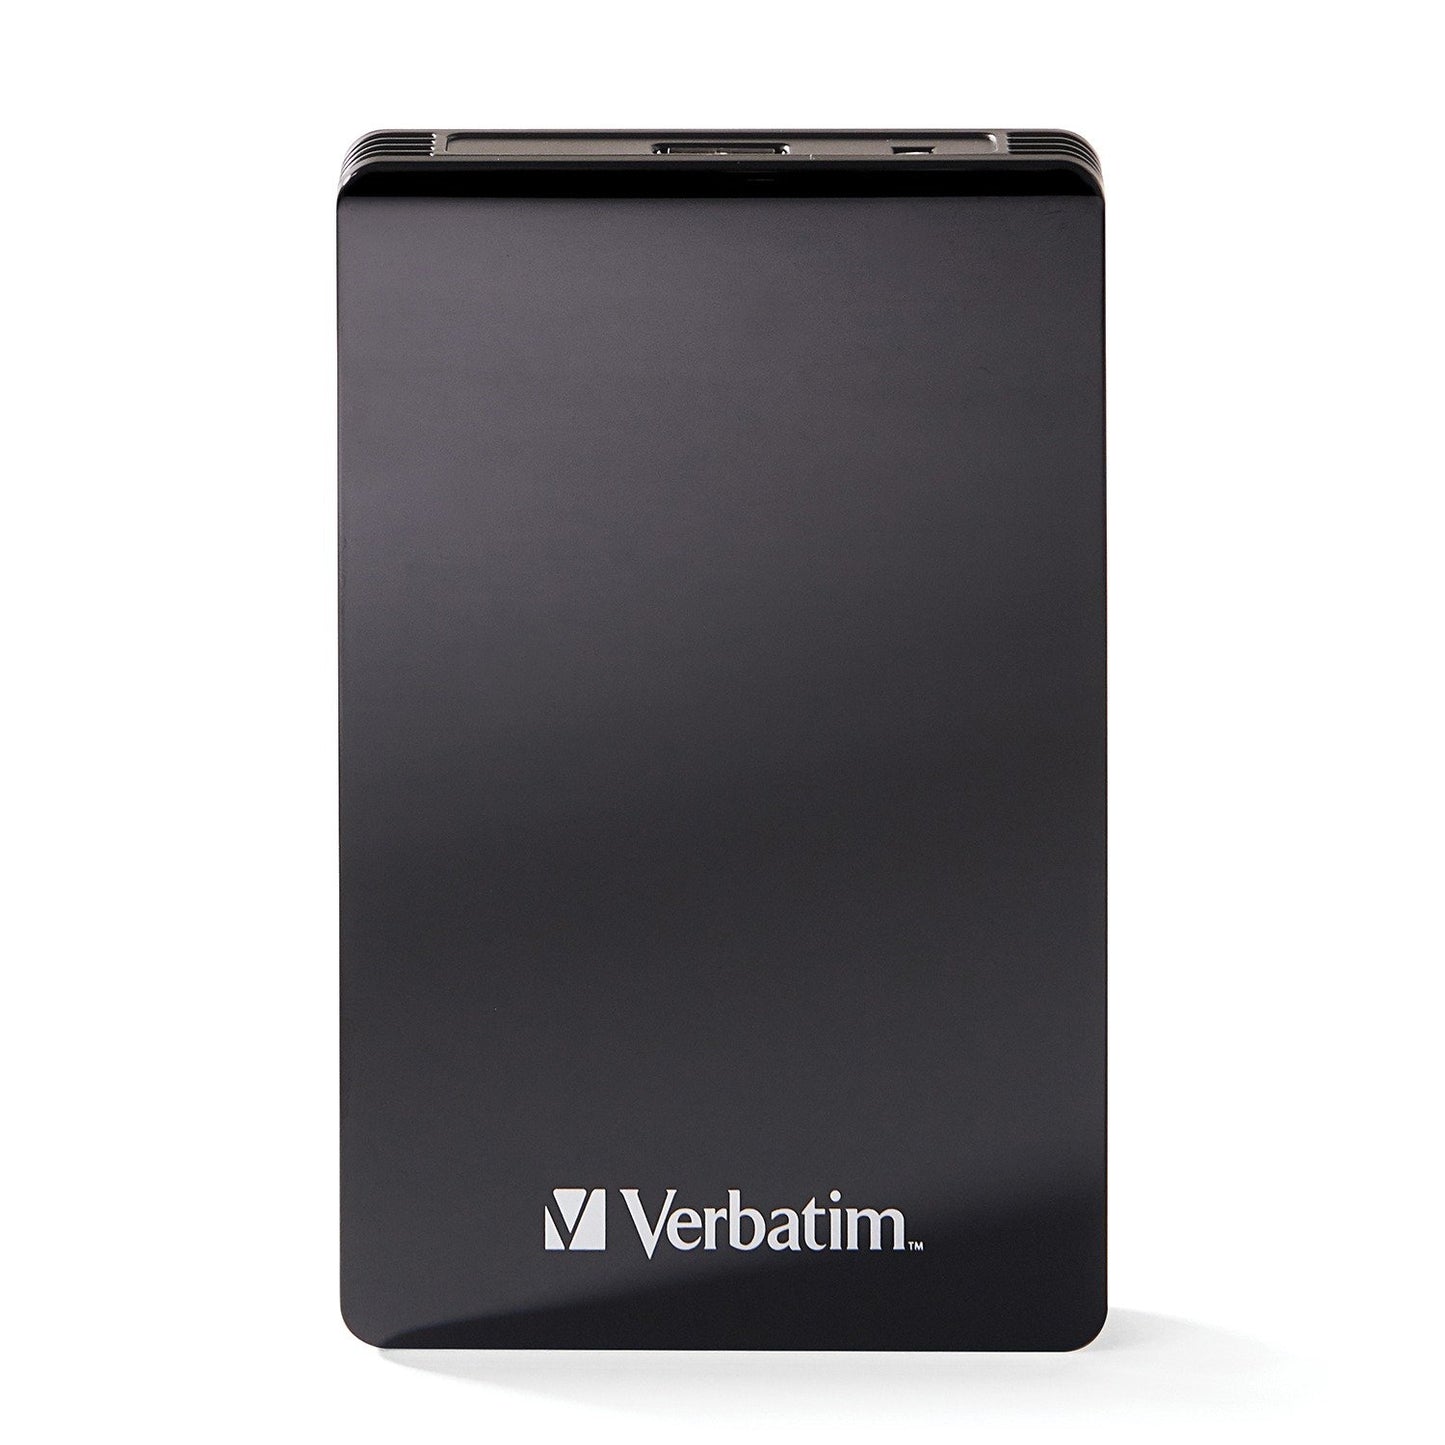 Verbatim 70382 Vx460 USB 3.1 External SSD (256 GB)